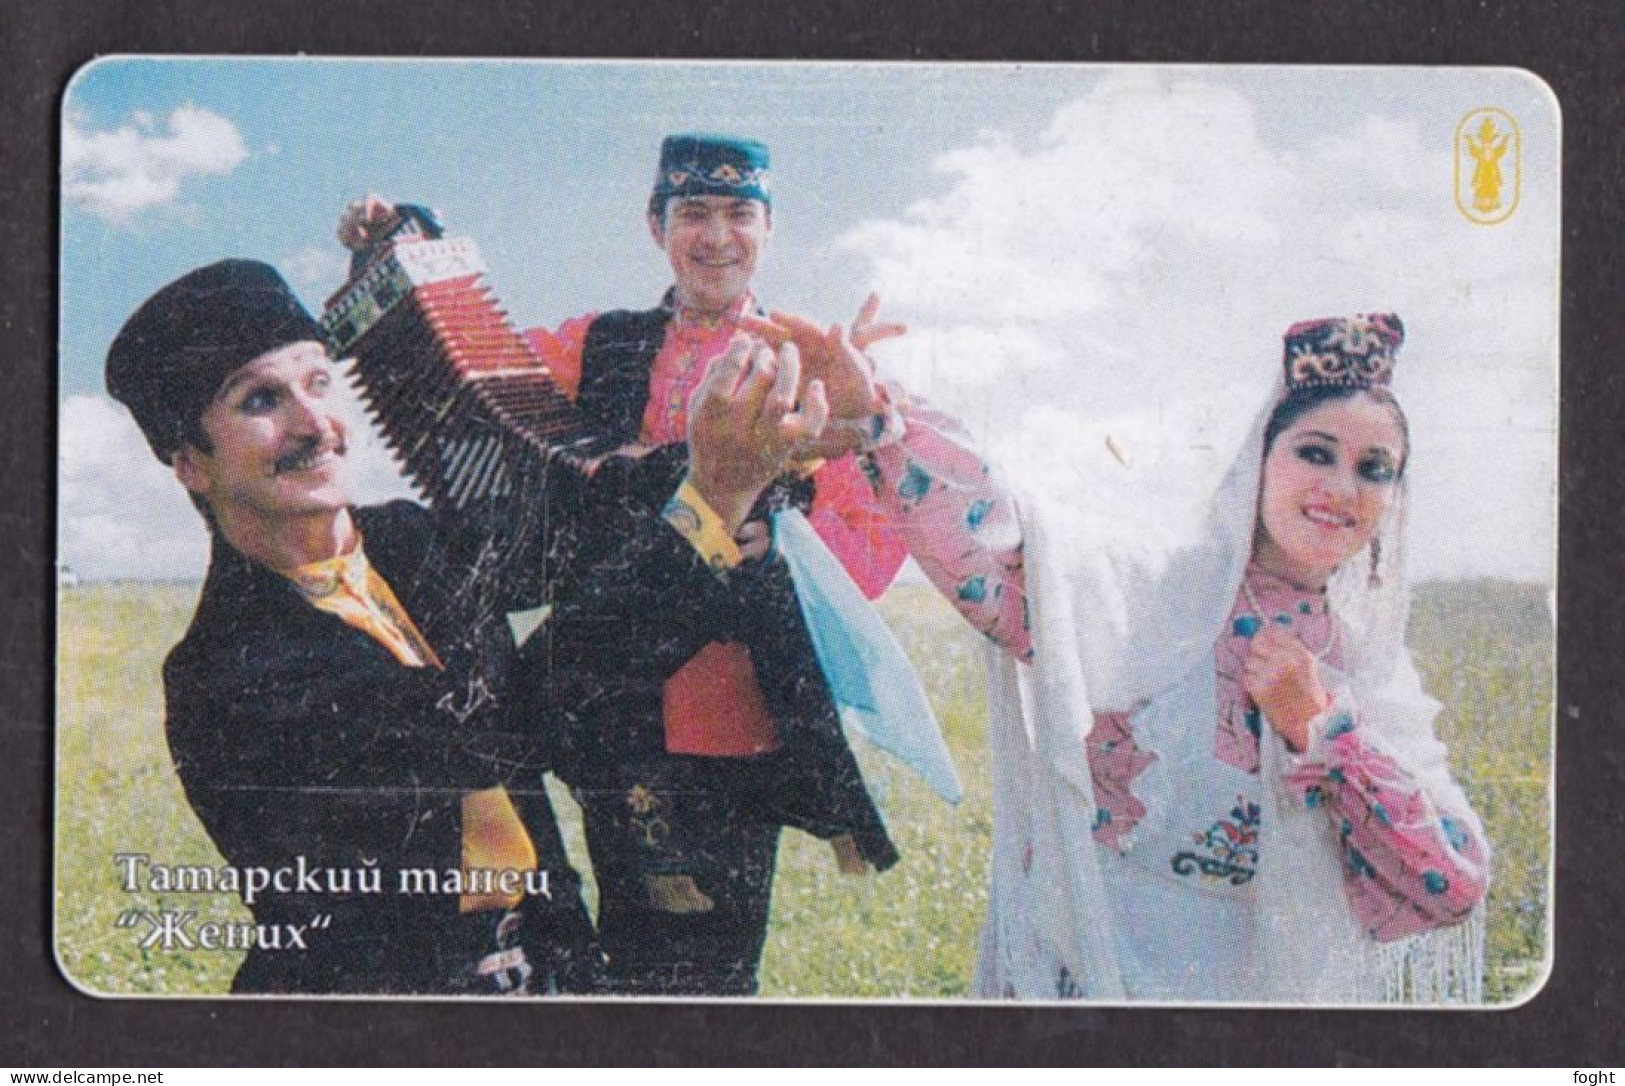 2002 Russia Bashinformsvyaz-Ufa,Tatar Dance "Bridegroom",90 Units Card,Col:RU-BIS-V-006 - Rusia